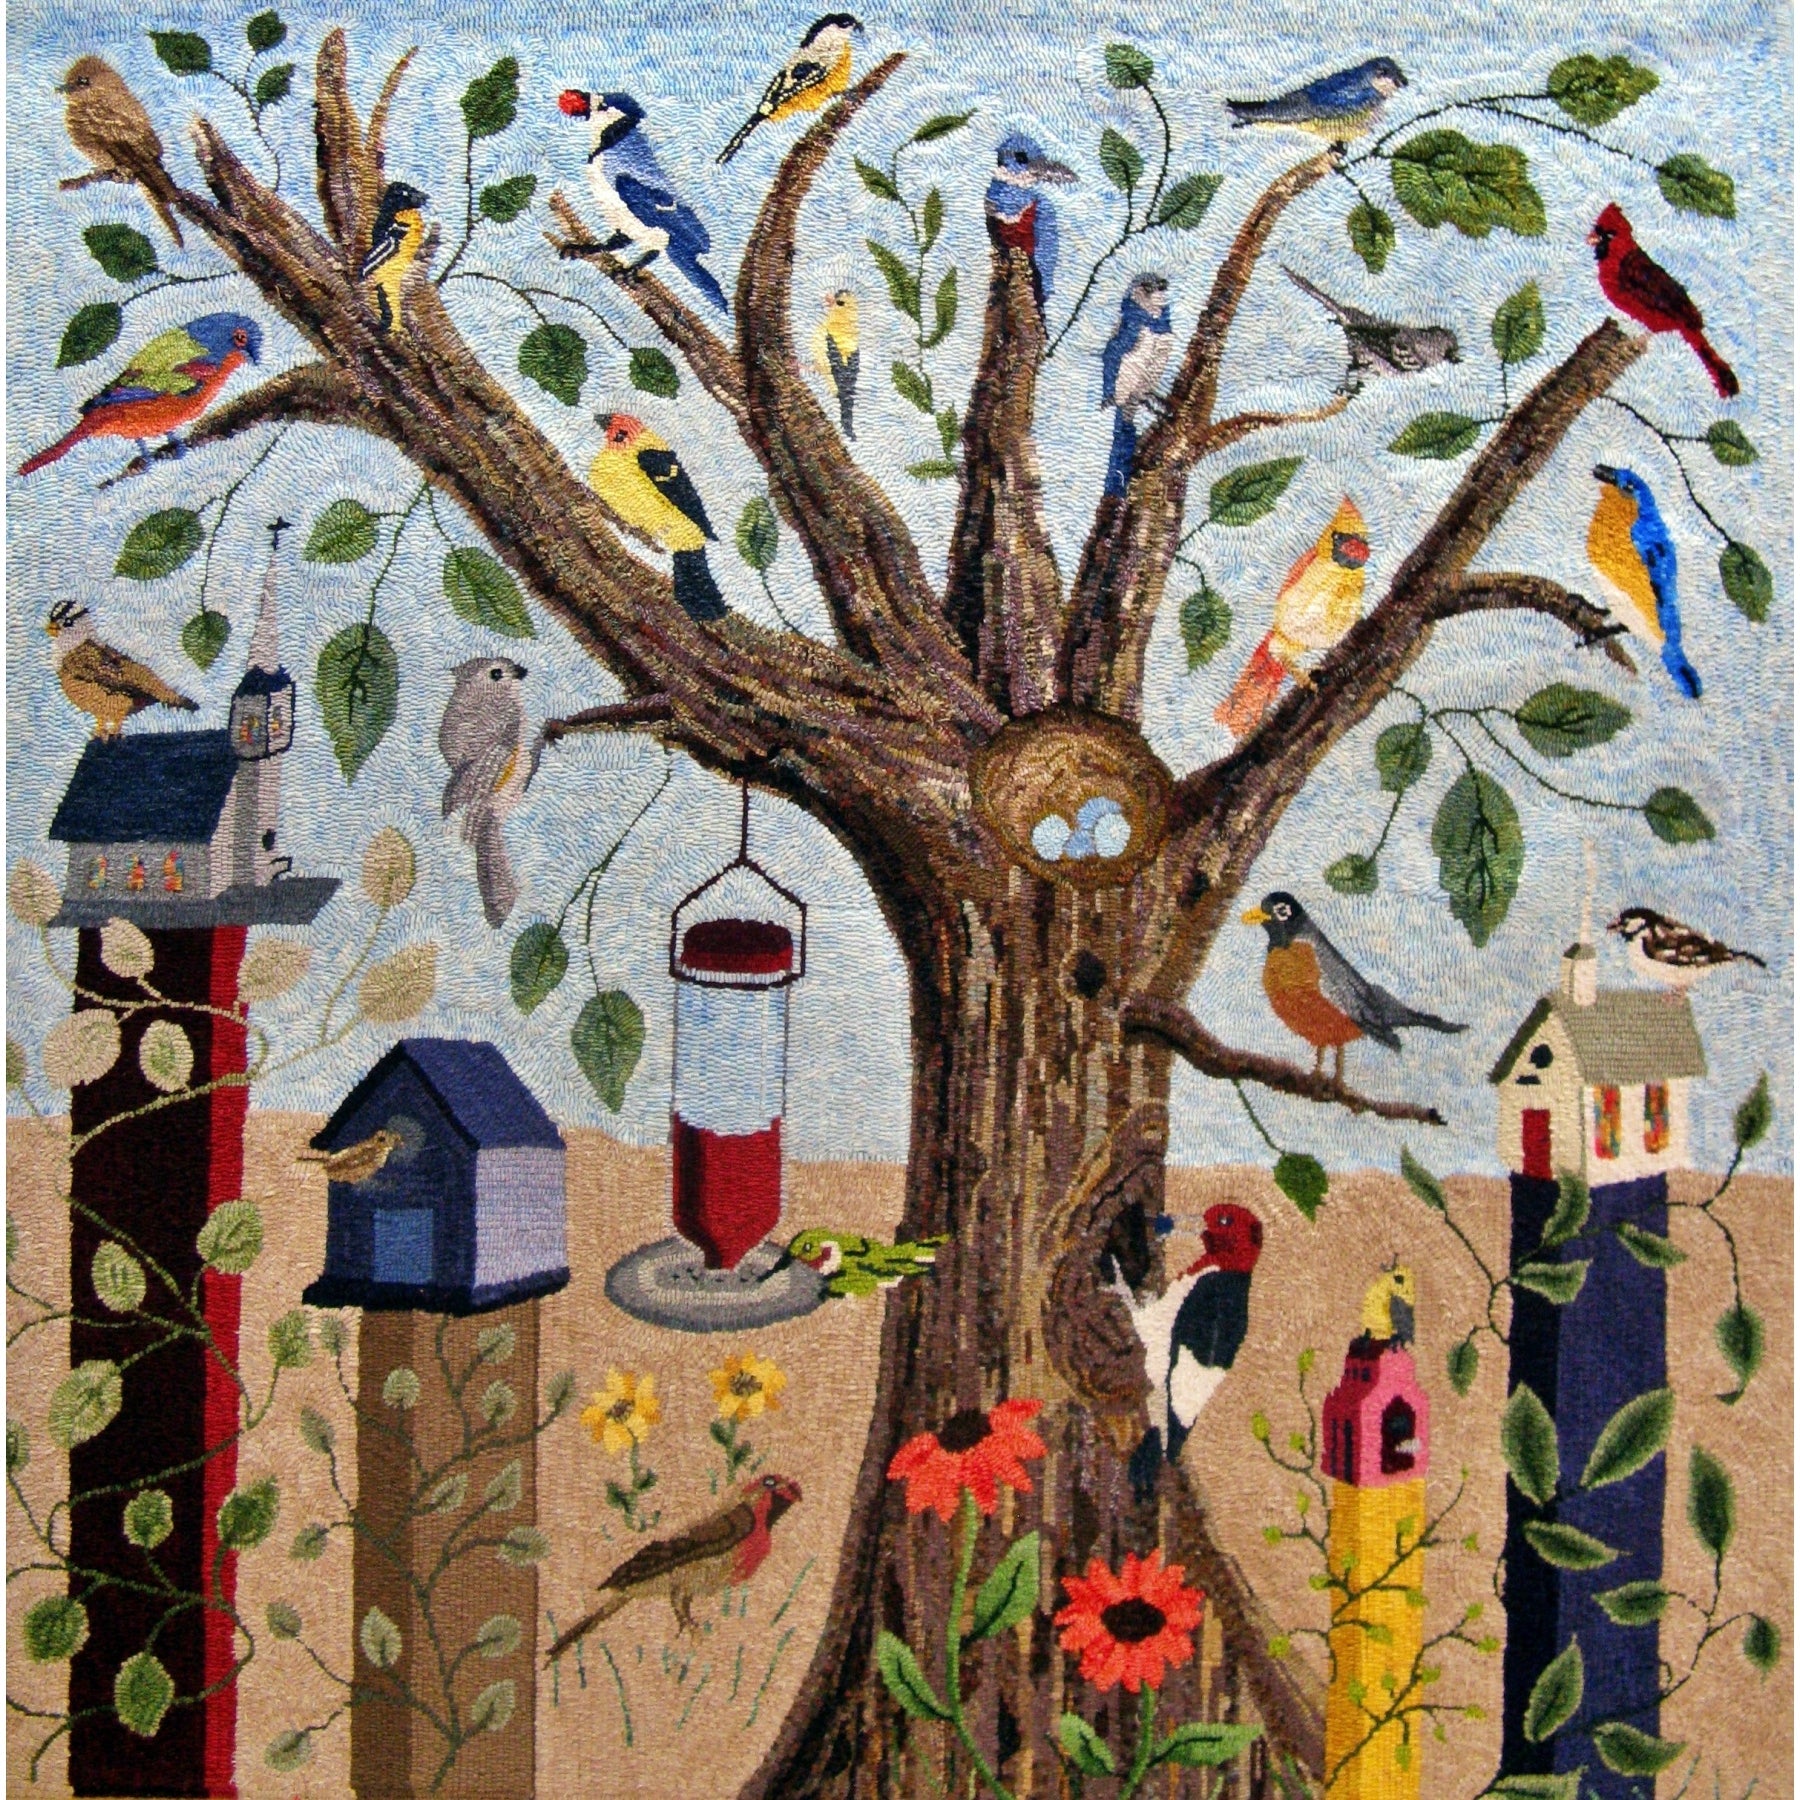 Tree with Birds and Birdhouses, rug hooked by Karen Maddox & Sondra Kellar